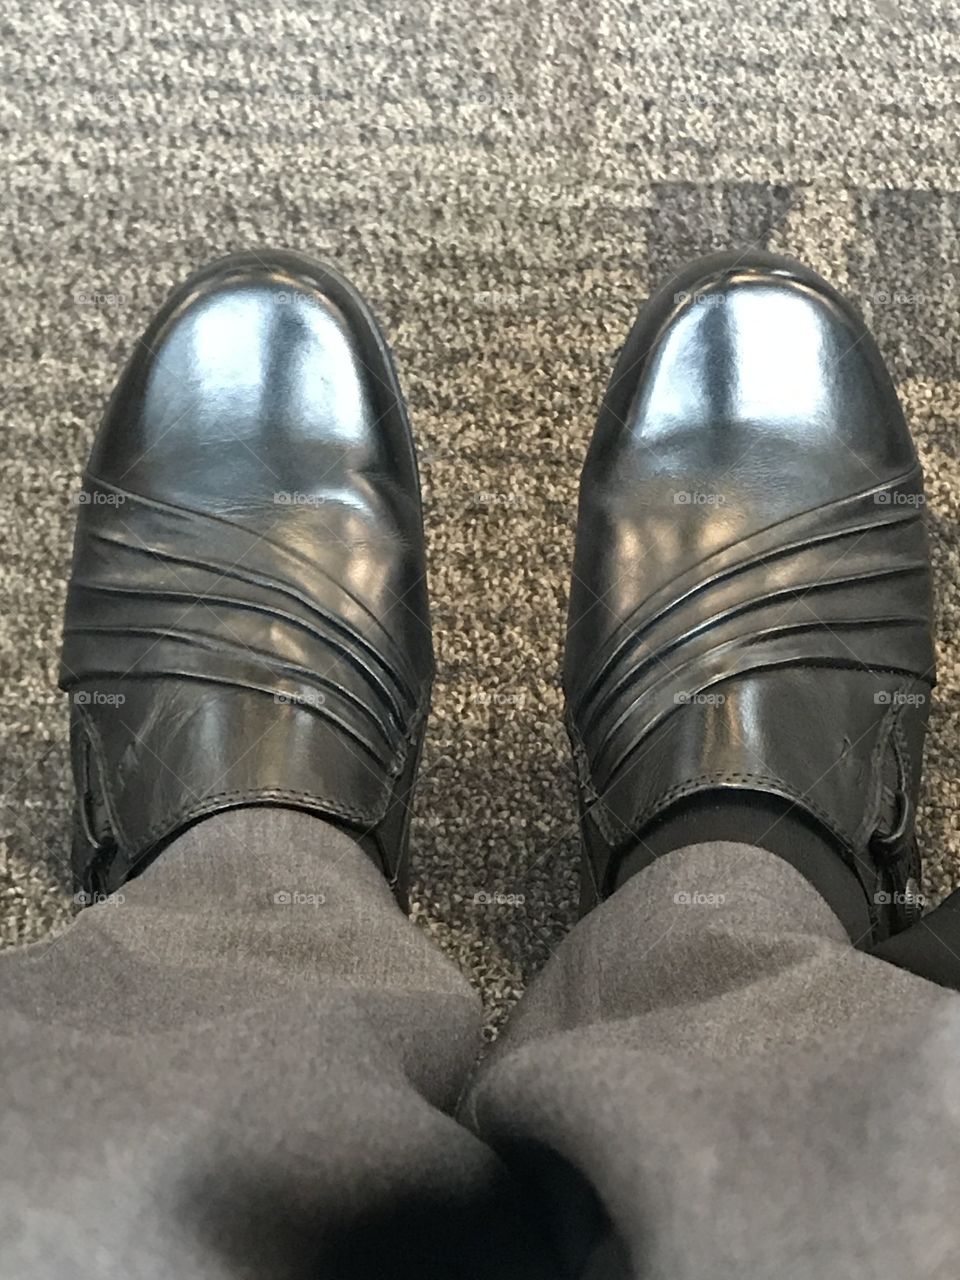 Freshly shined shoes 